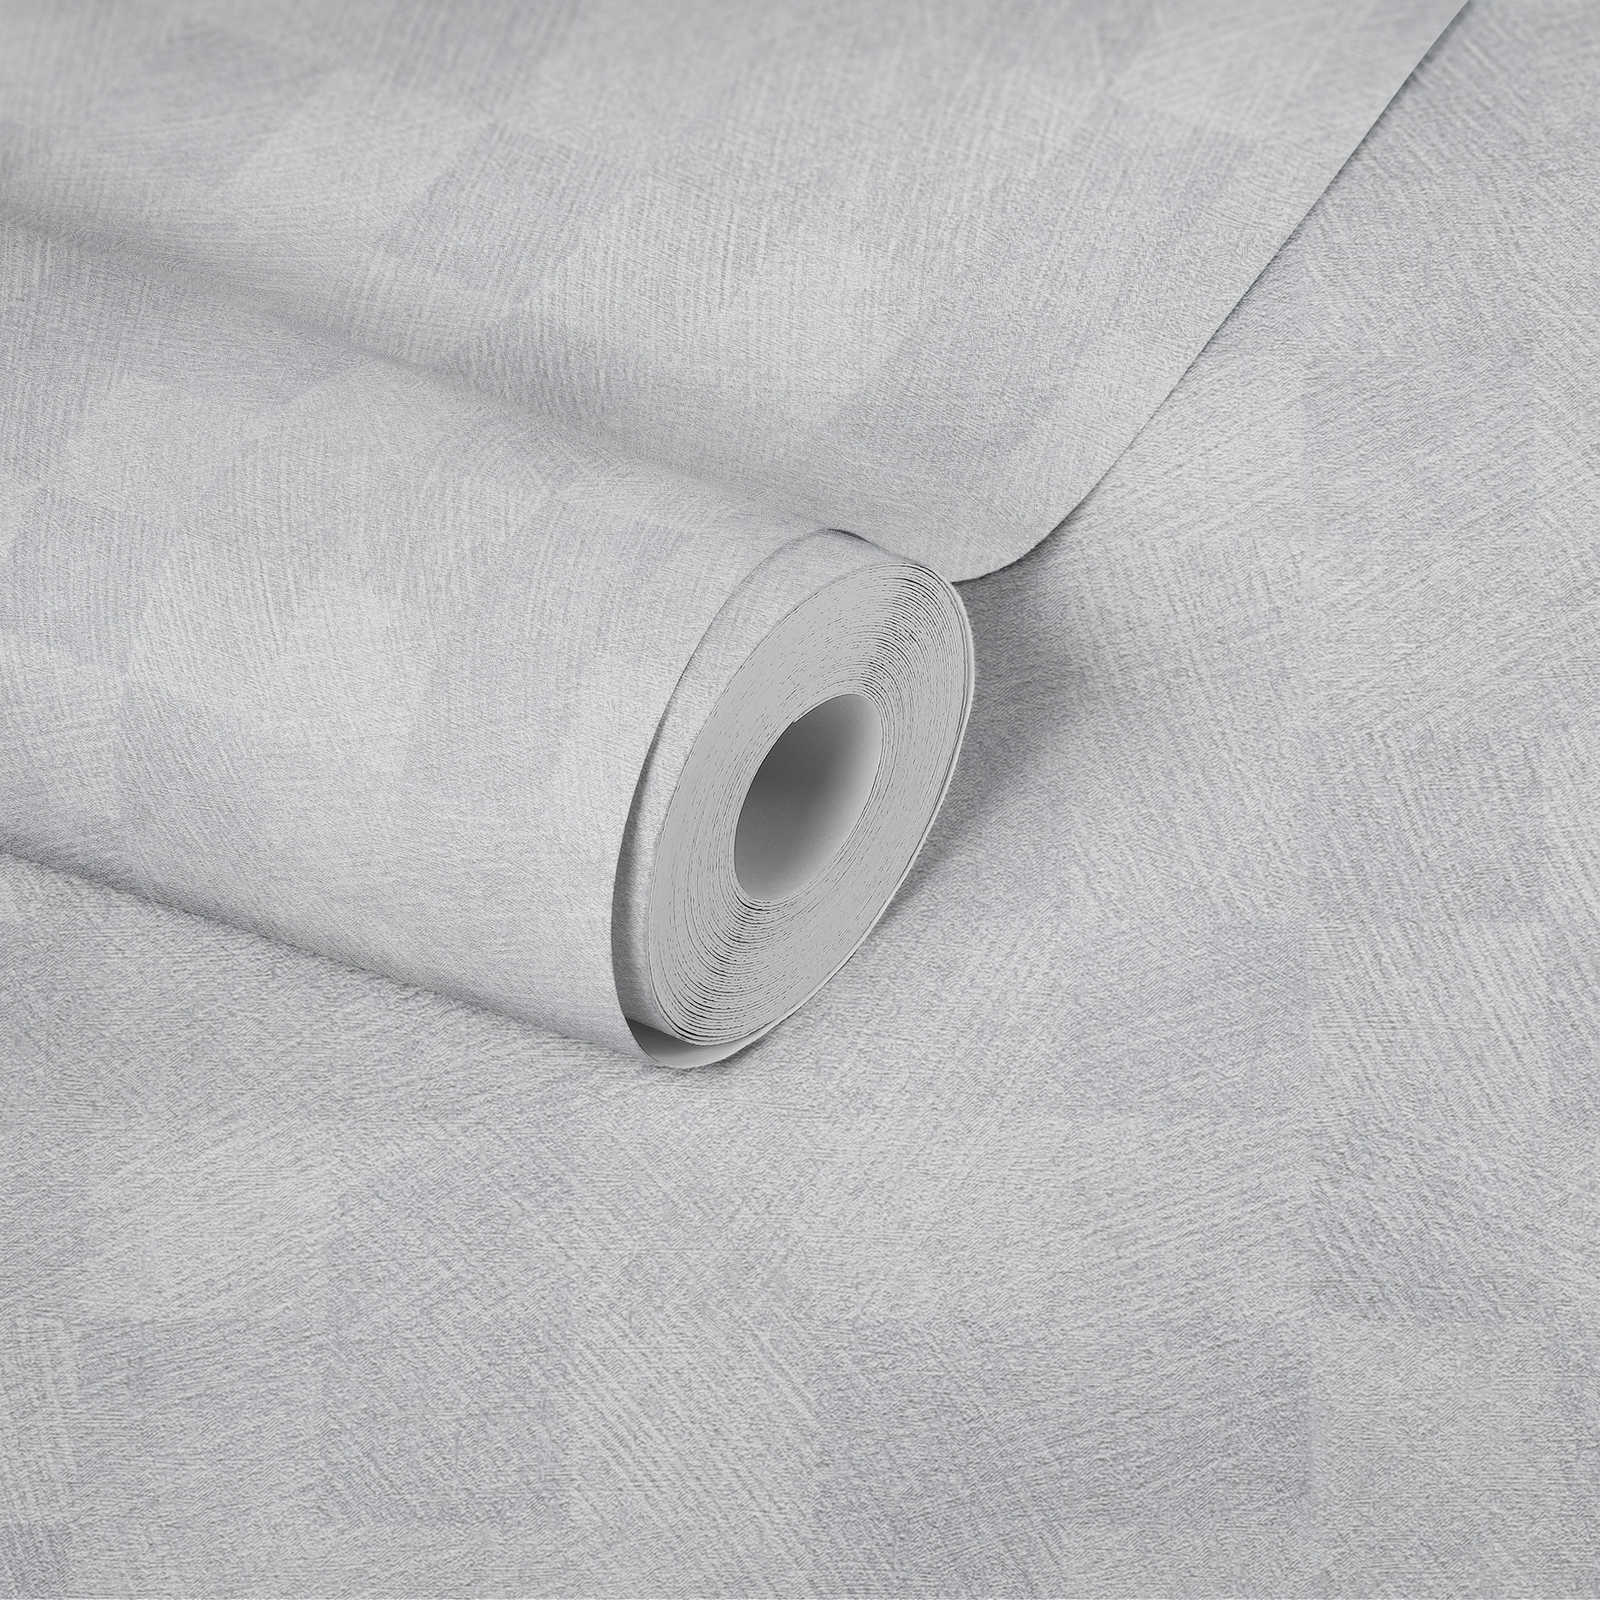 Titanium 3 - Textured Checkers geometric wallpaper AS Creation    